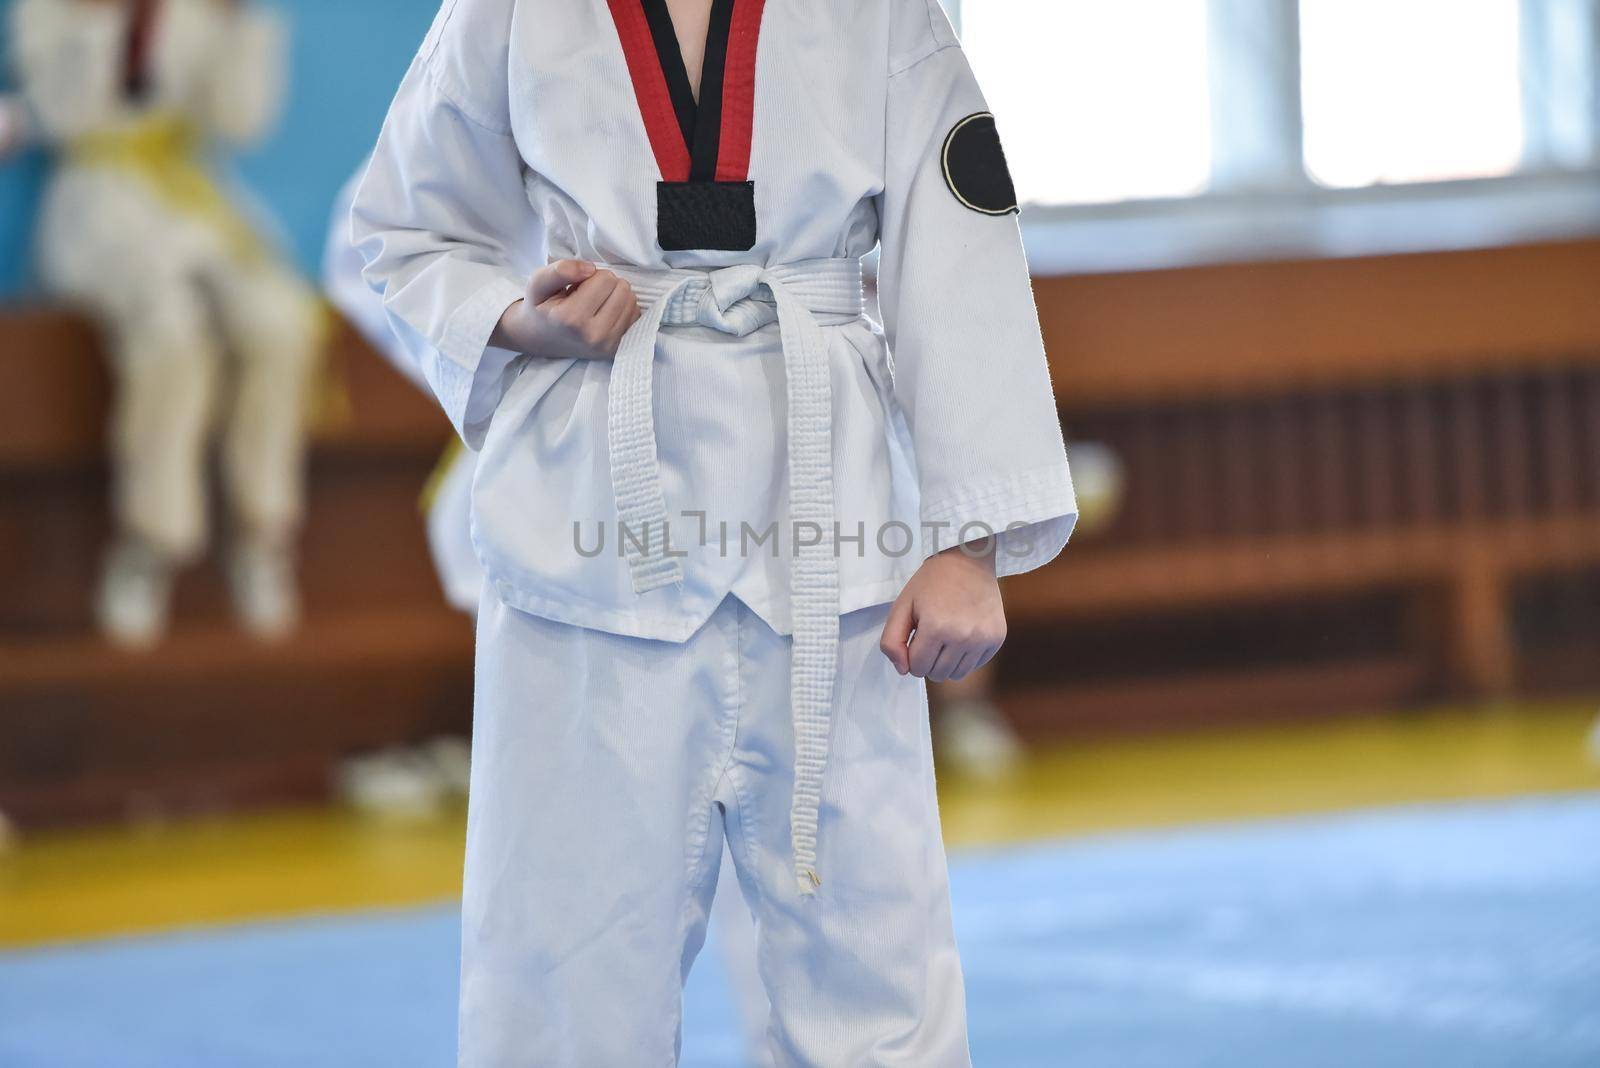 Taekwondo kids. A boy athlete stands in a taekwondo uniform with a white belt during a taekwondo tournament by karpovkottt